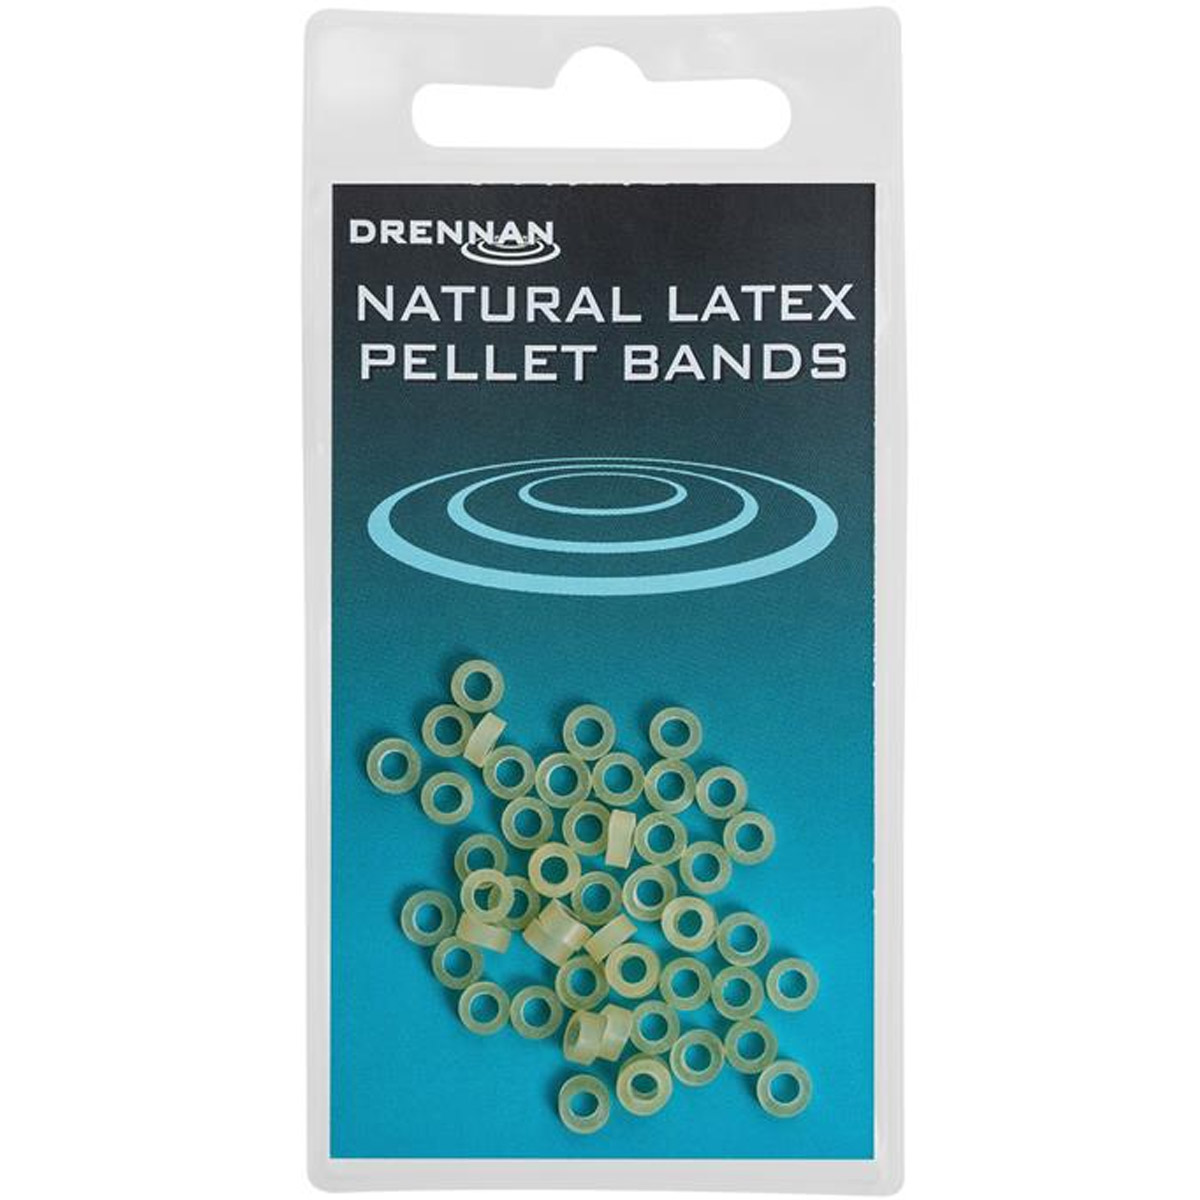 Drennan Latex Pellet Bands Natural